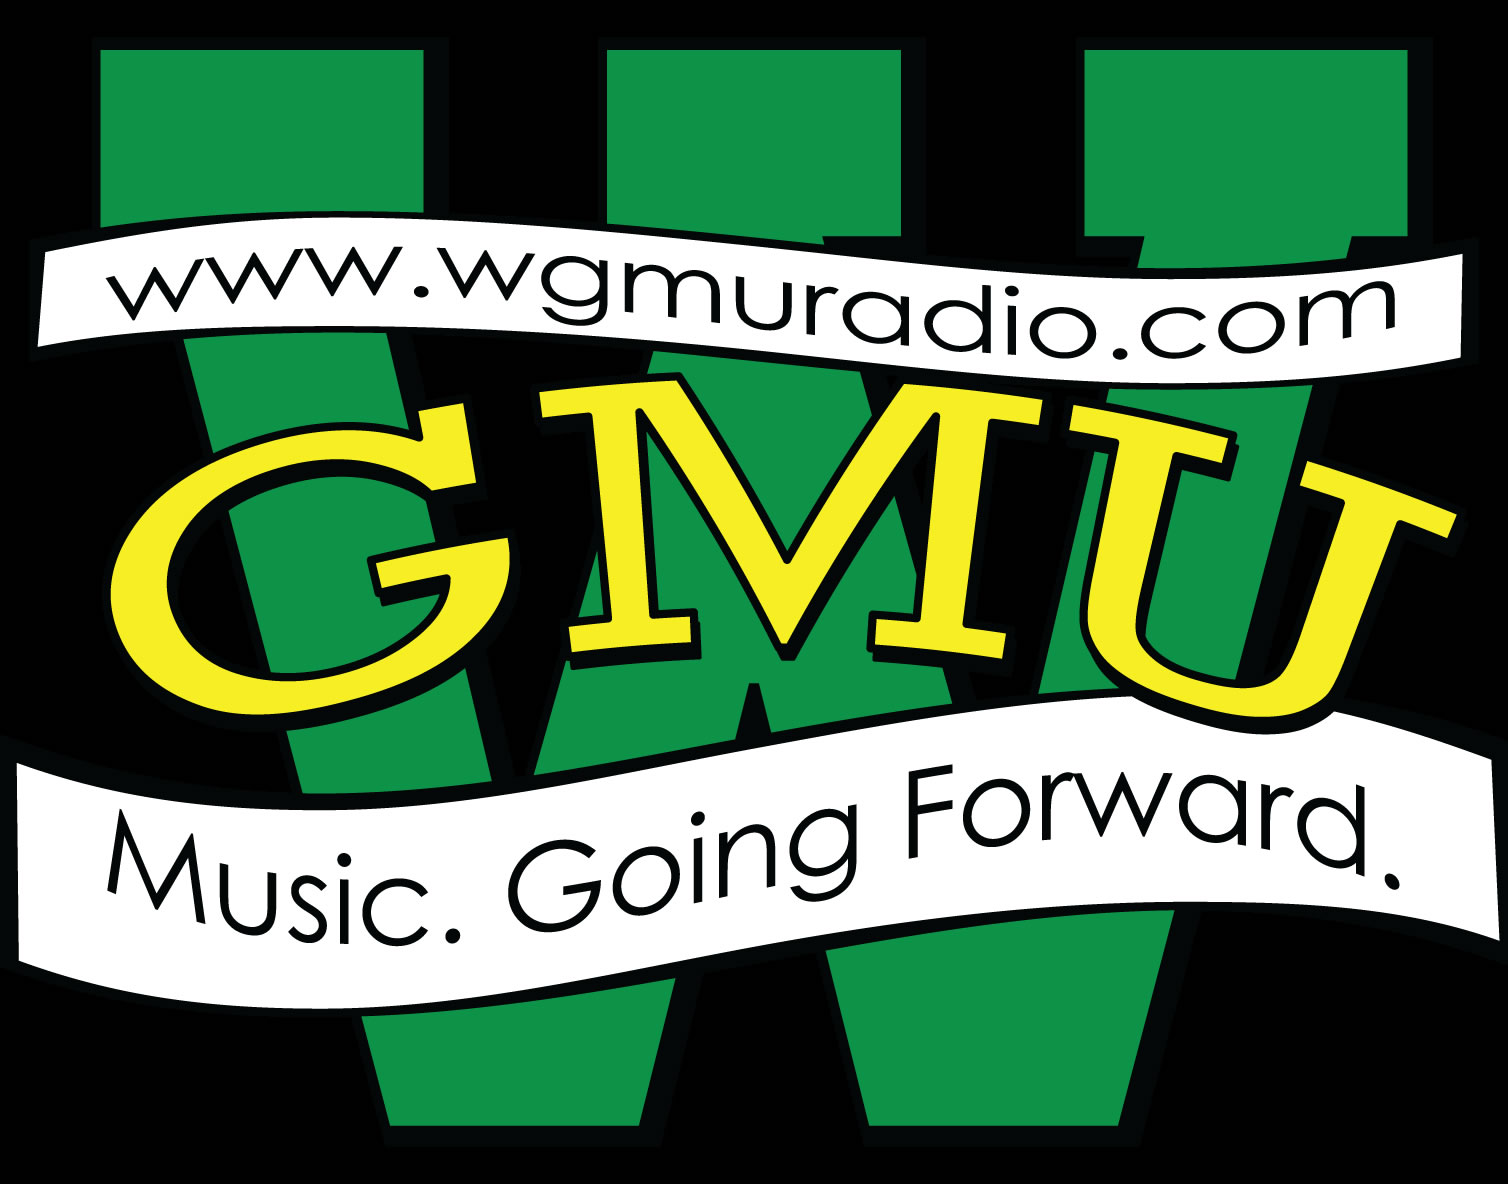 wgmu logo